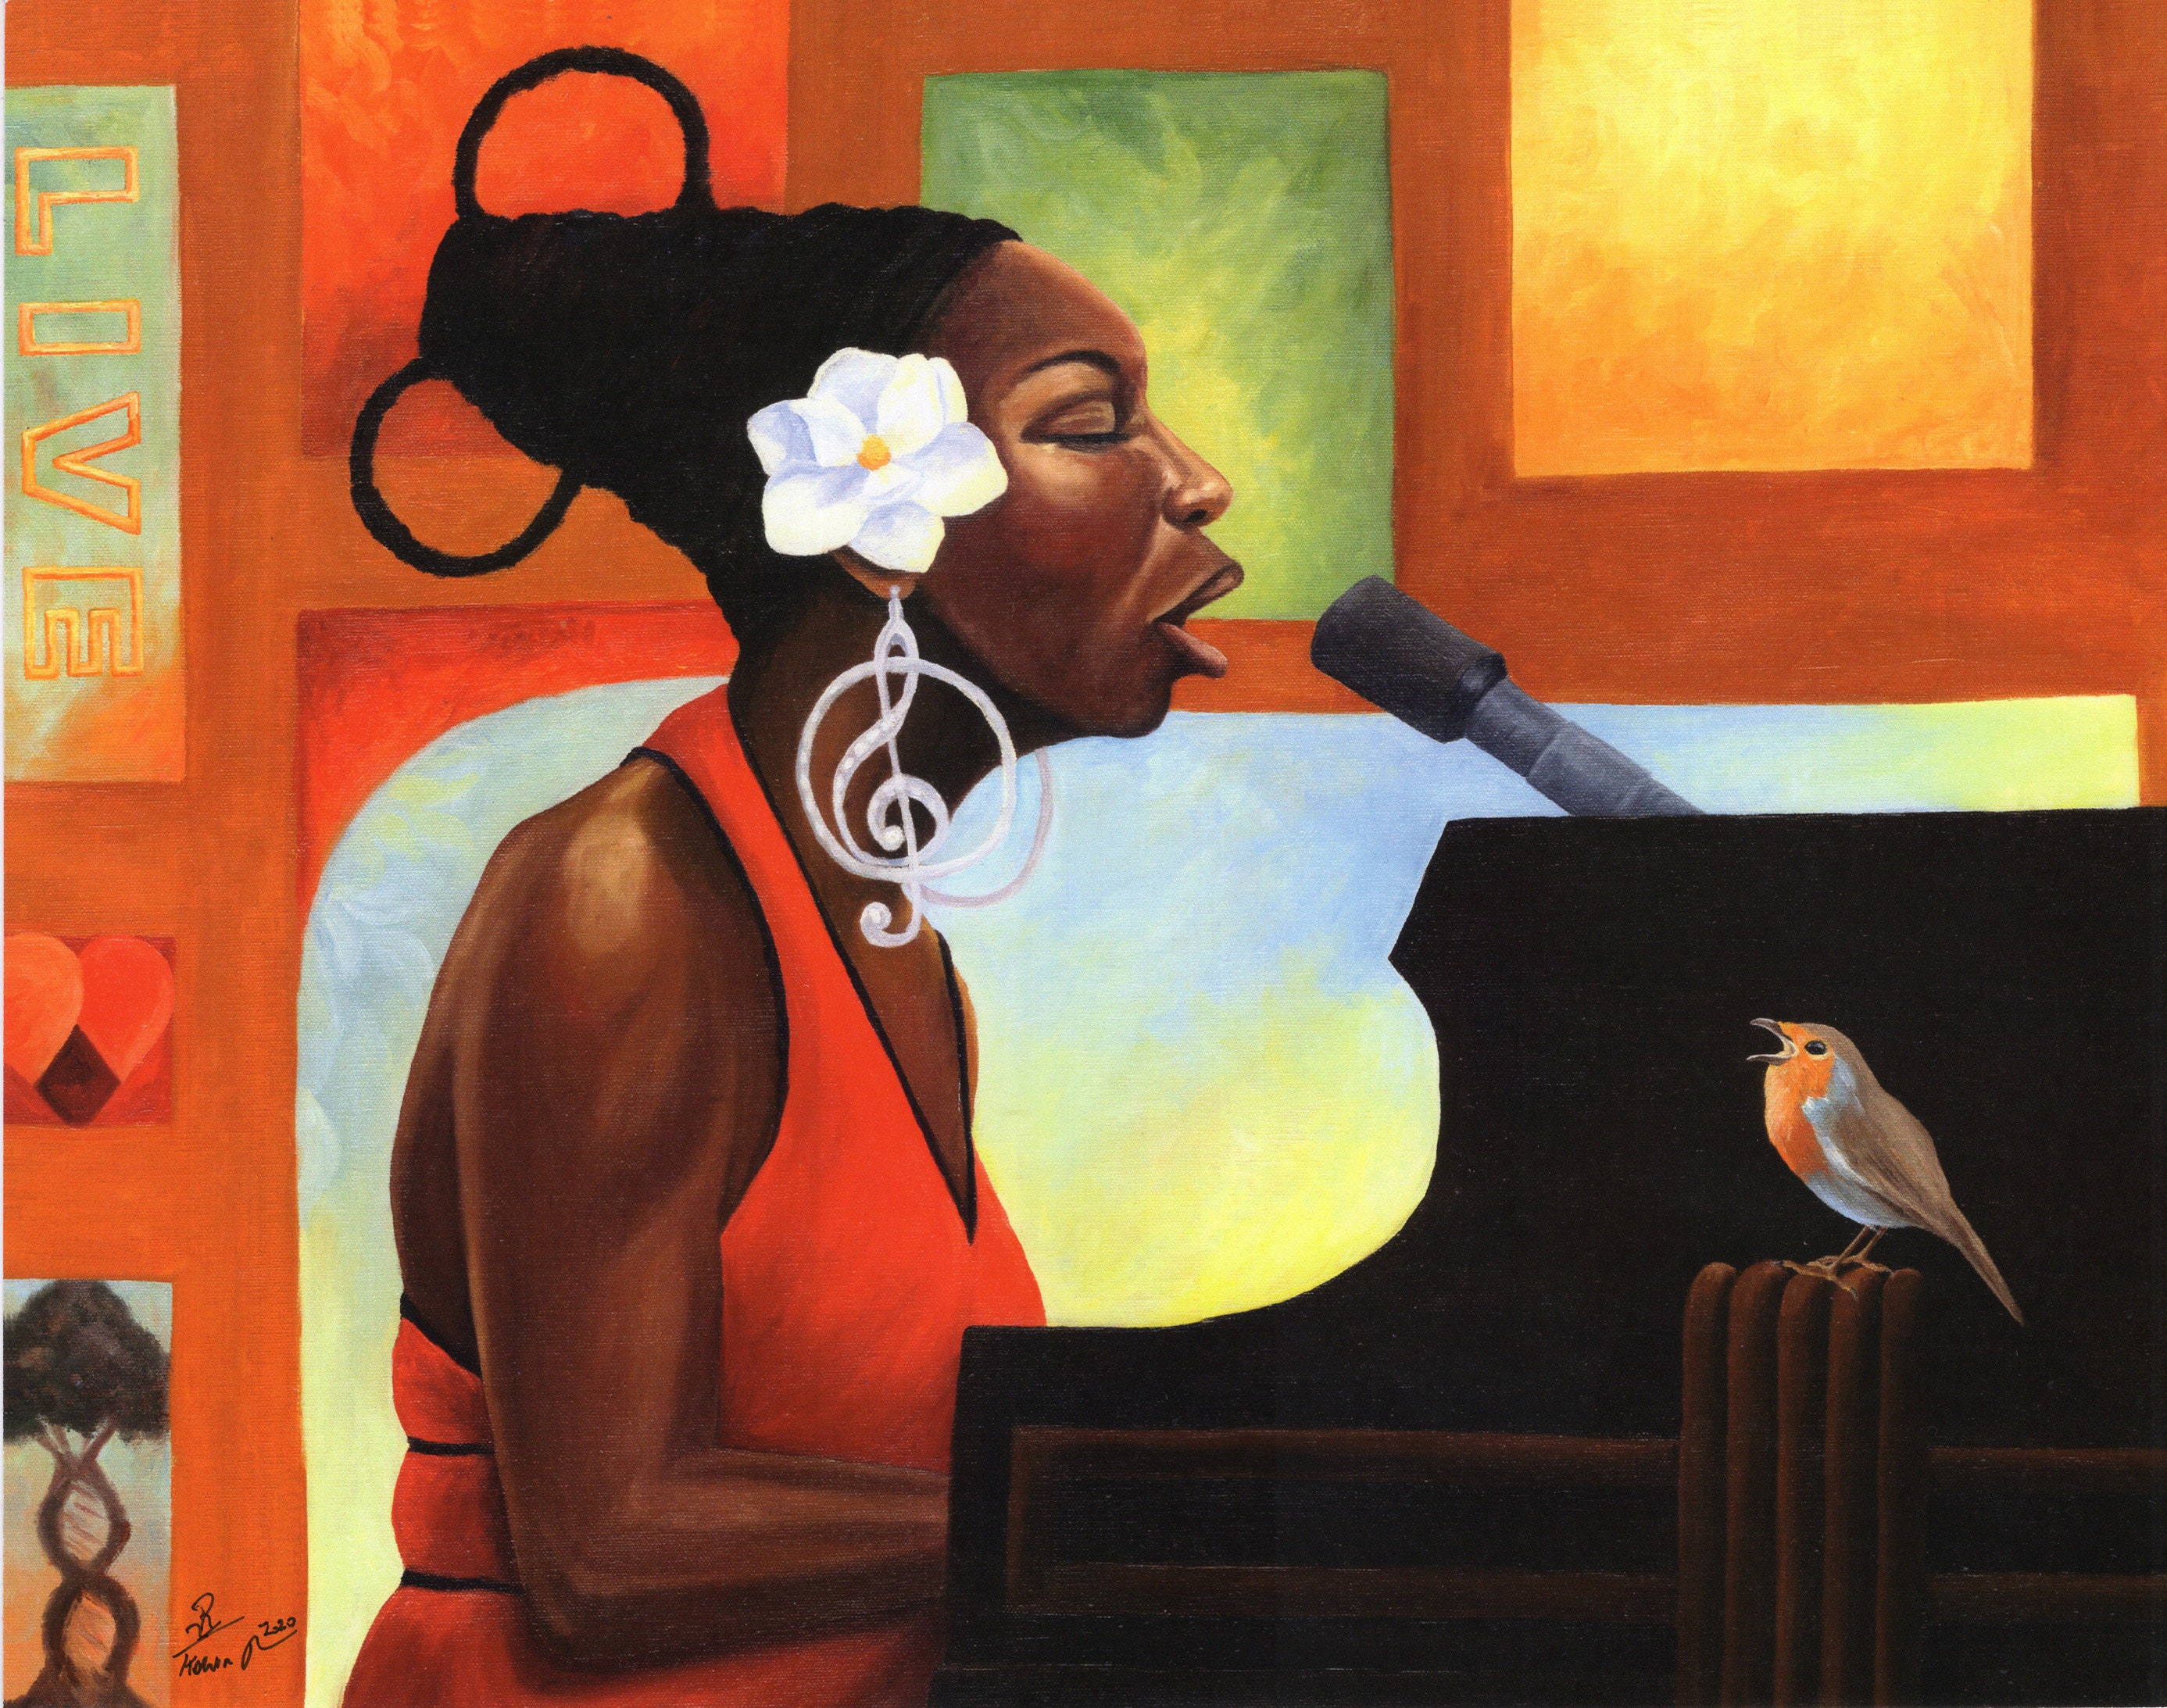 Nina Simone print by Bridgeman Images